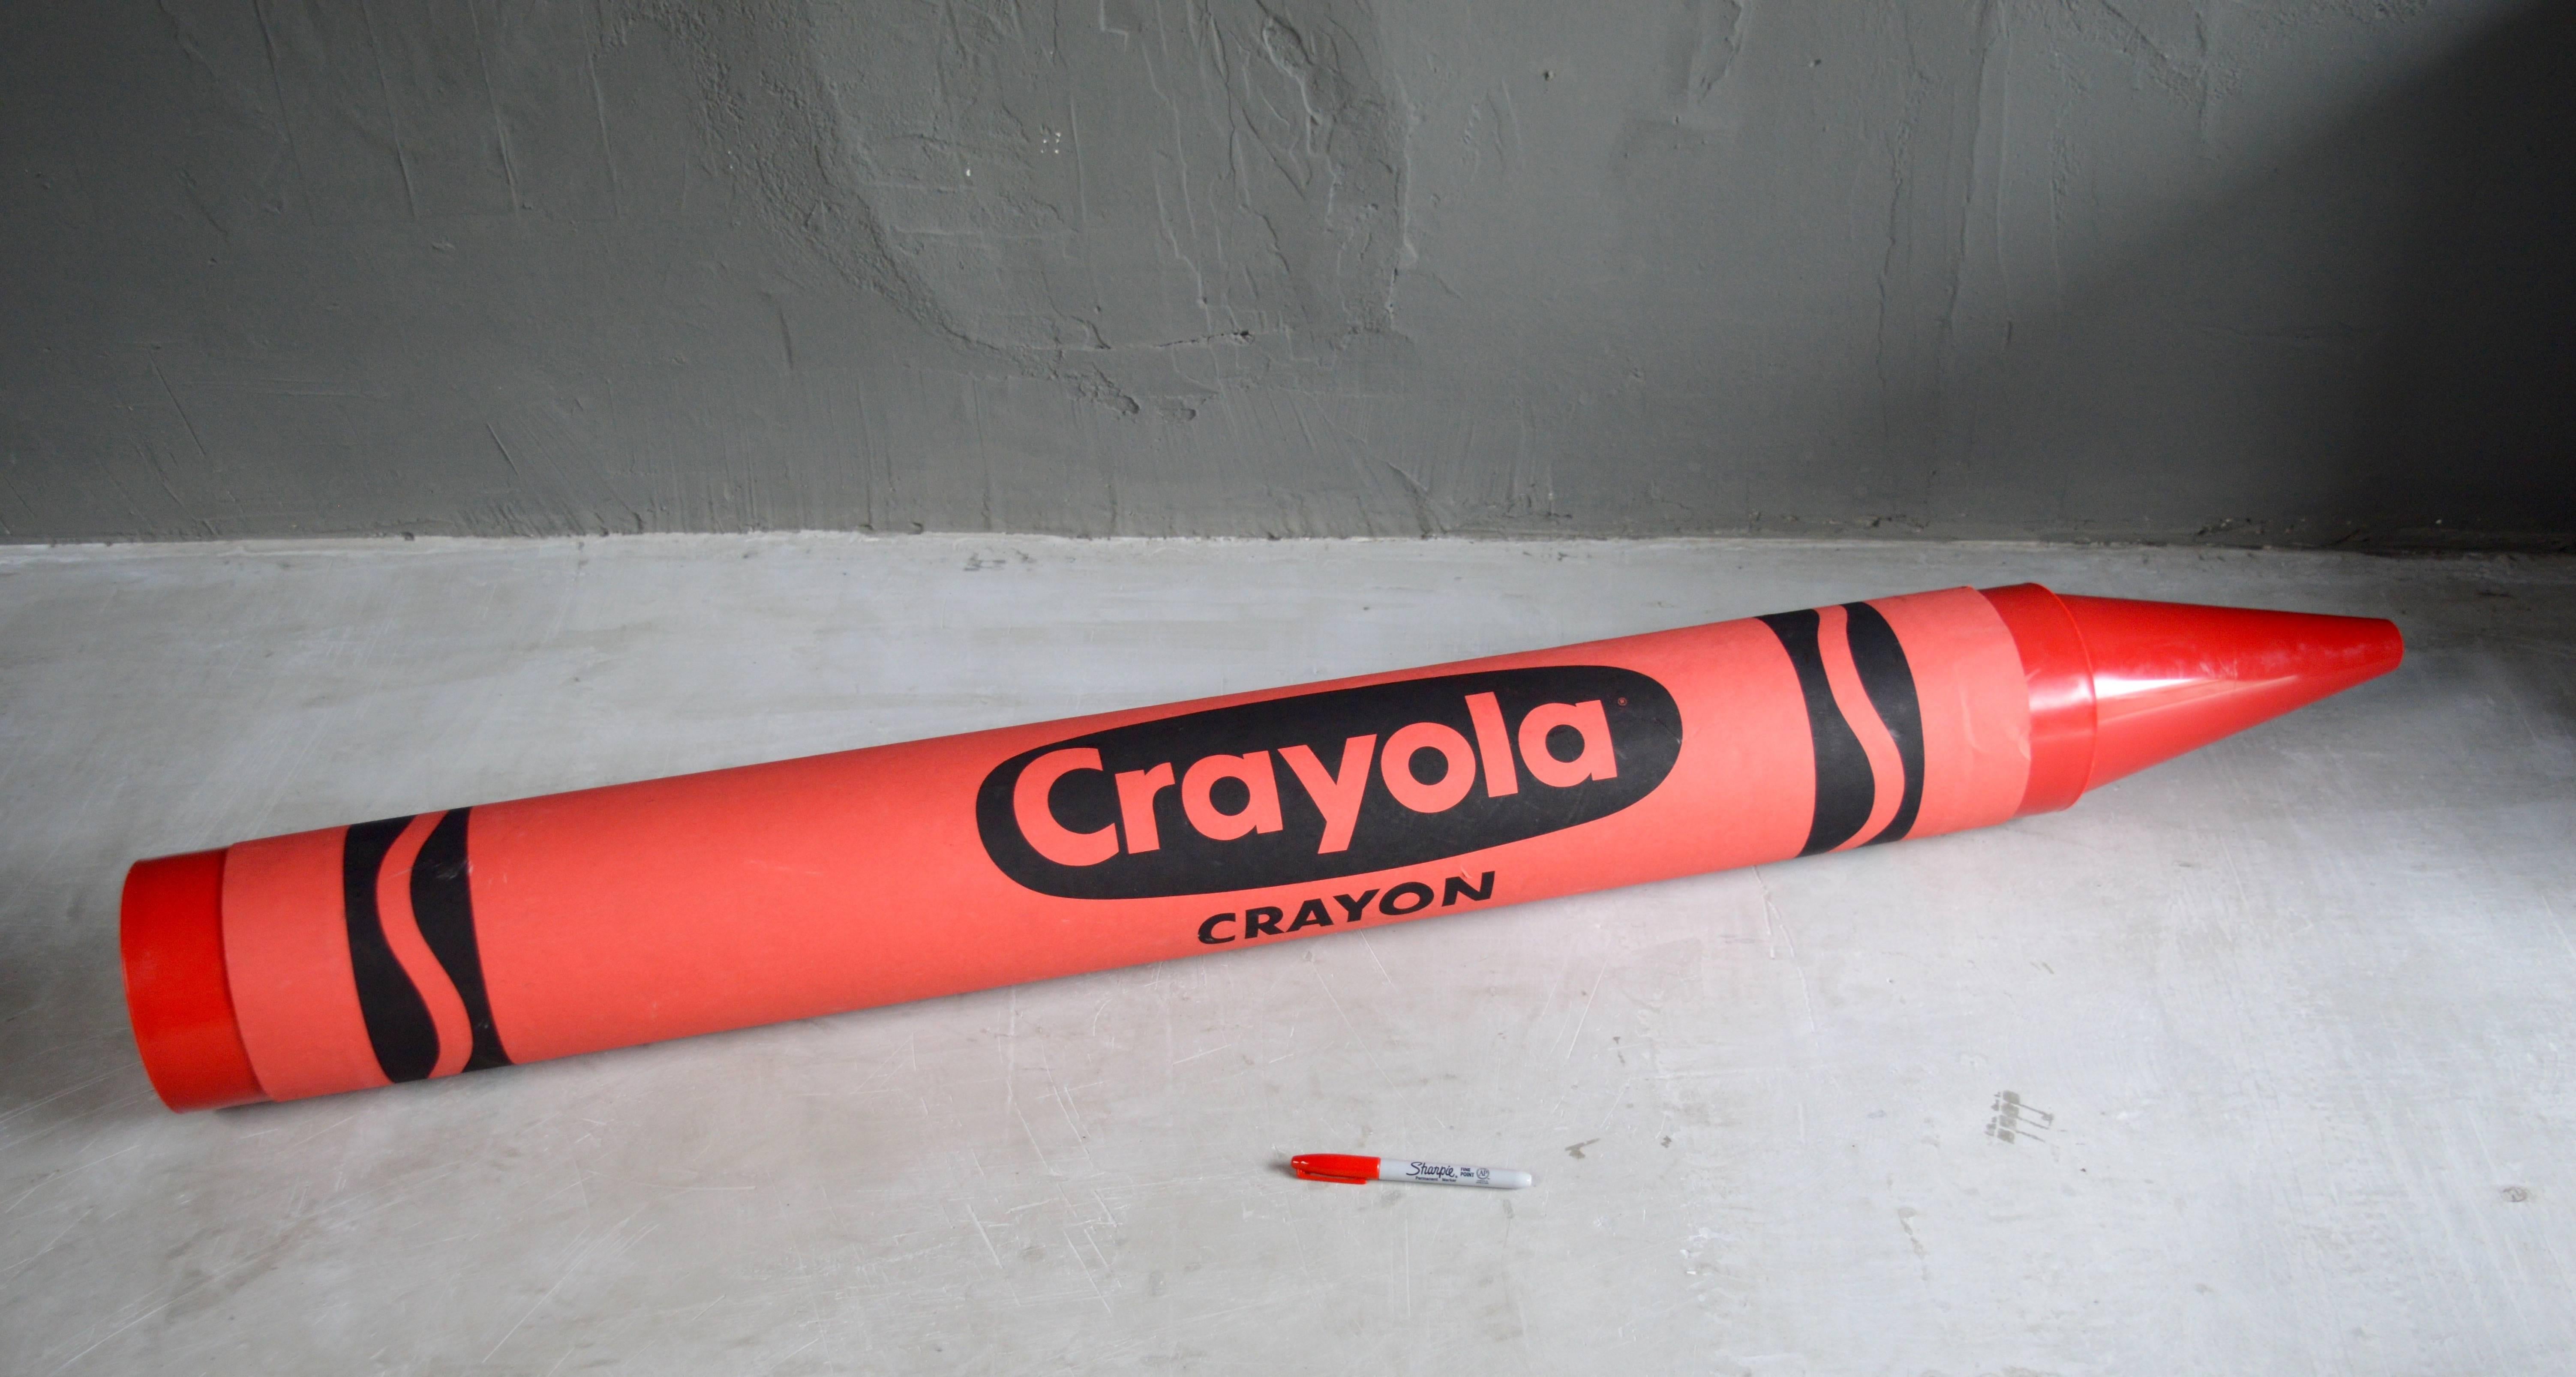 American Monumental Crayola Crayon For Sale